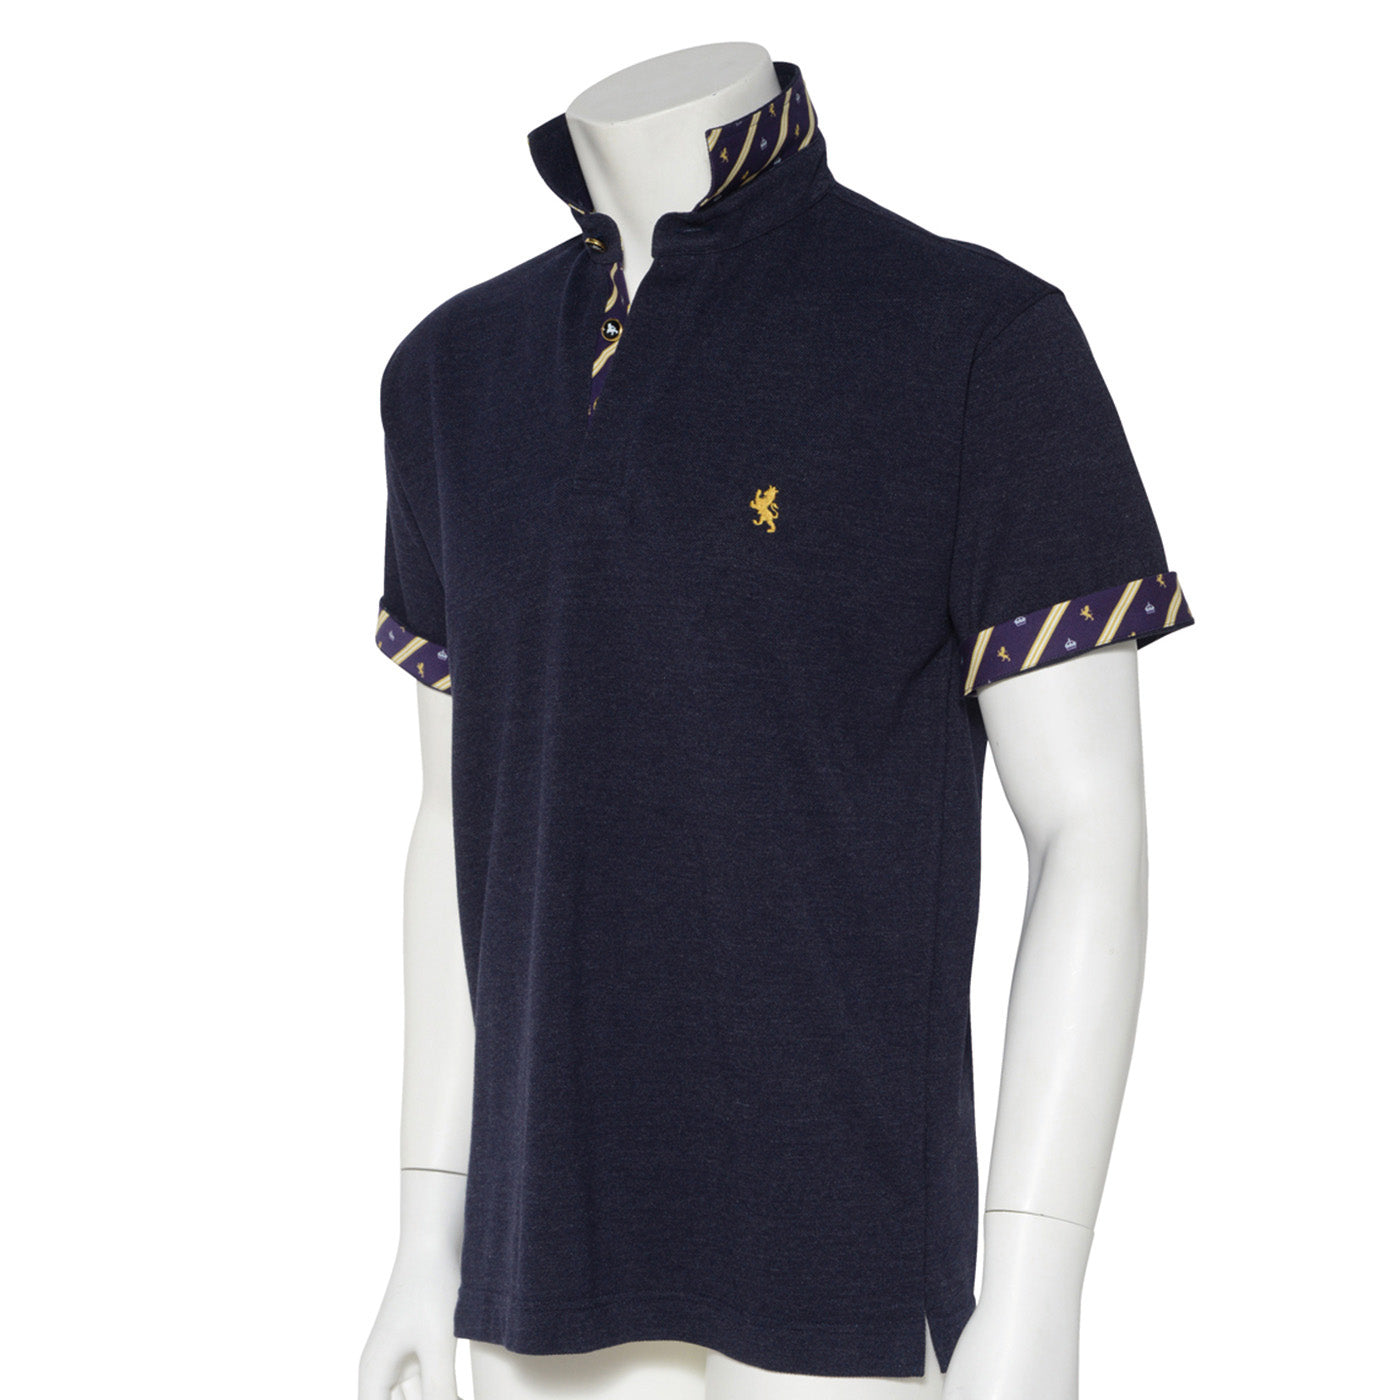 Men’s Short Sleeve Sports Polo Shirt -08. King Lion & Crown Design Made in Japan FORTUNA Tokyo